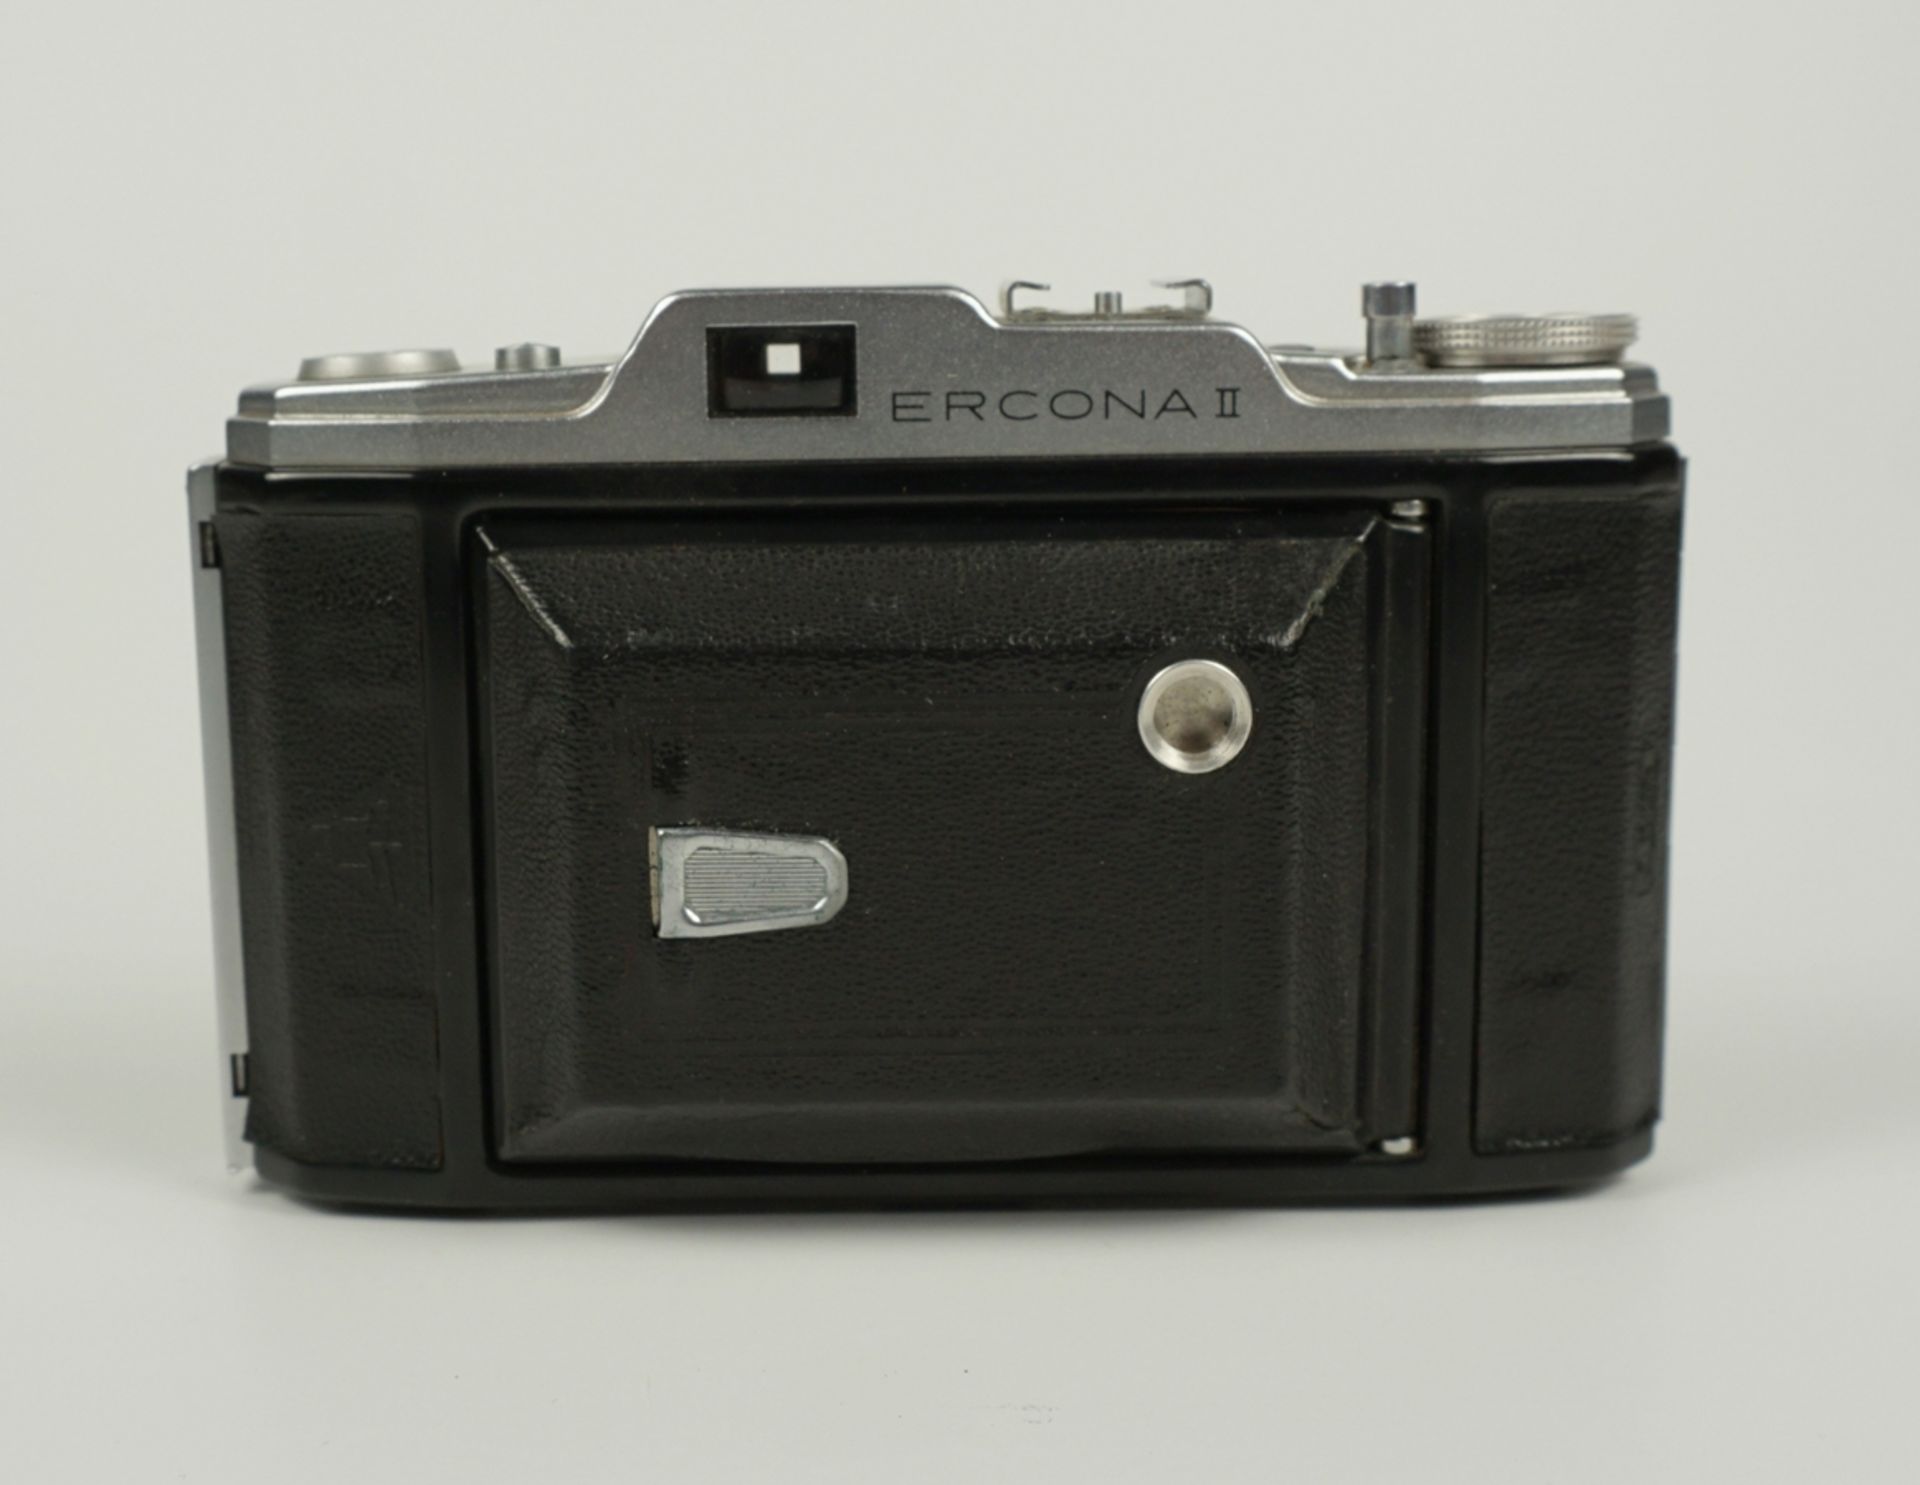 Pentacon Ercona II, Zweiformat-Sucherkamera / Rollfilm-Kamera, 1955er Jahre - Image 4 of 4